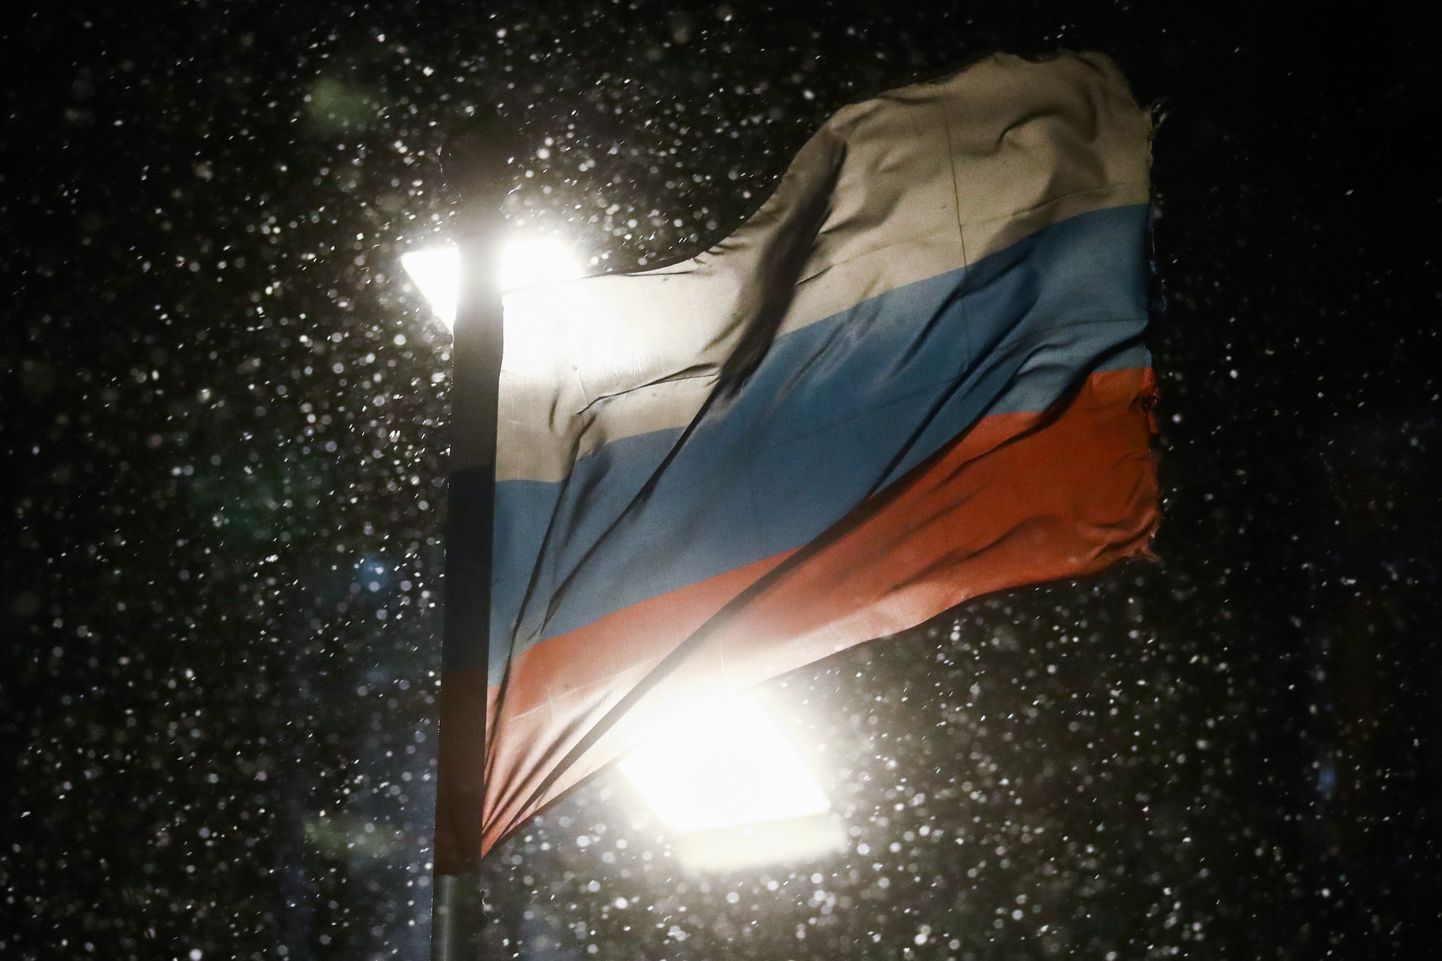 Российский флаг.